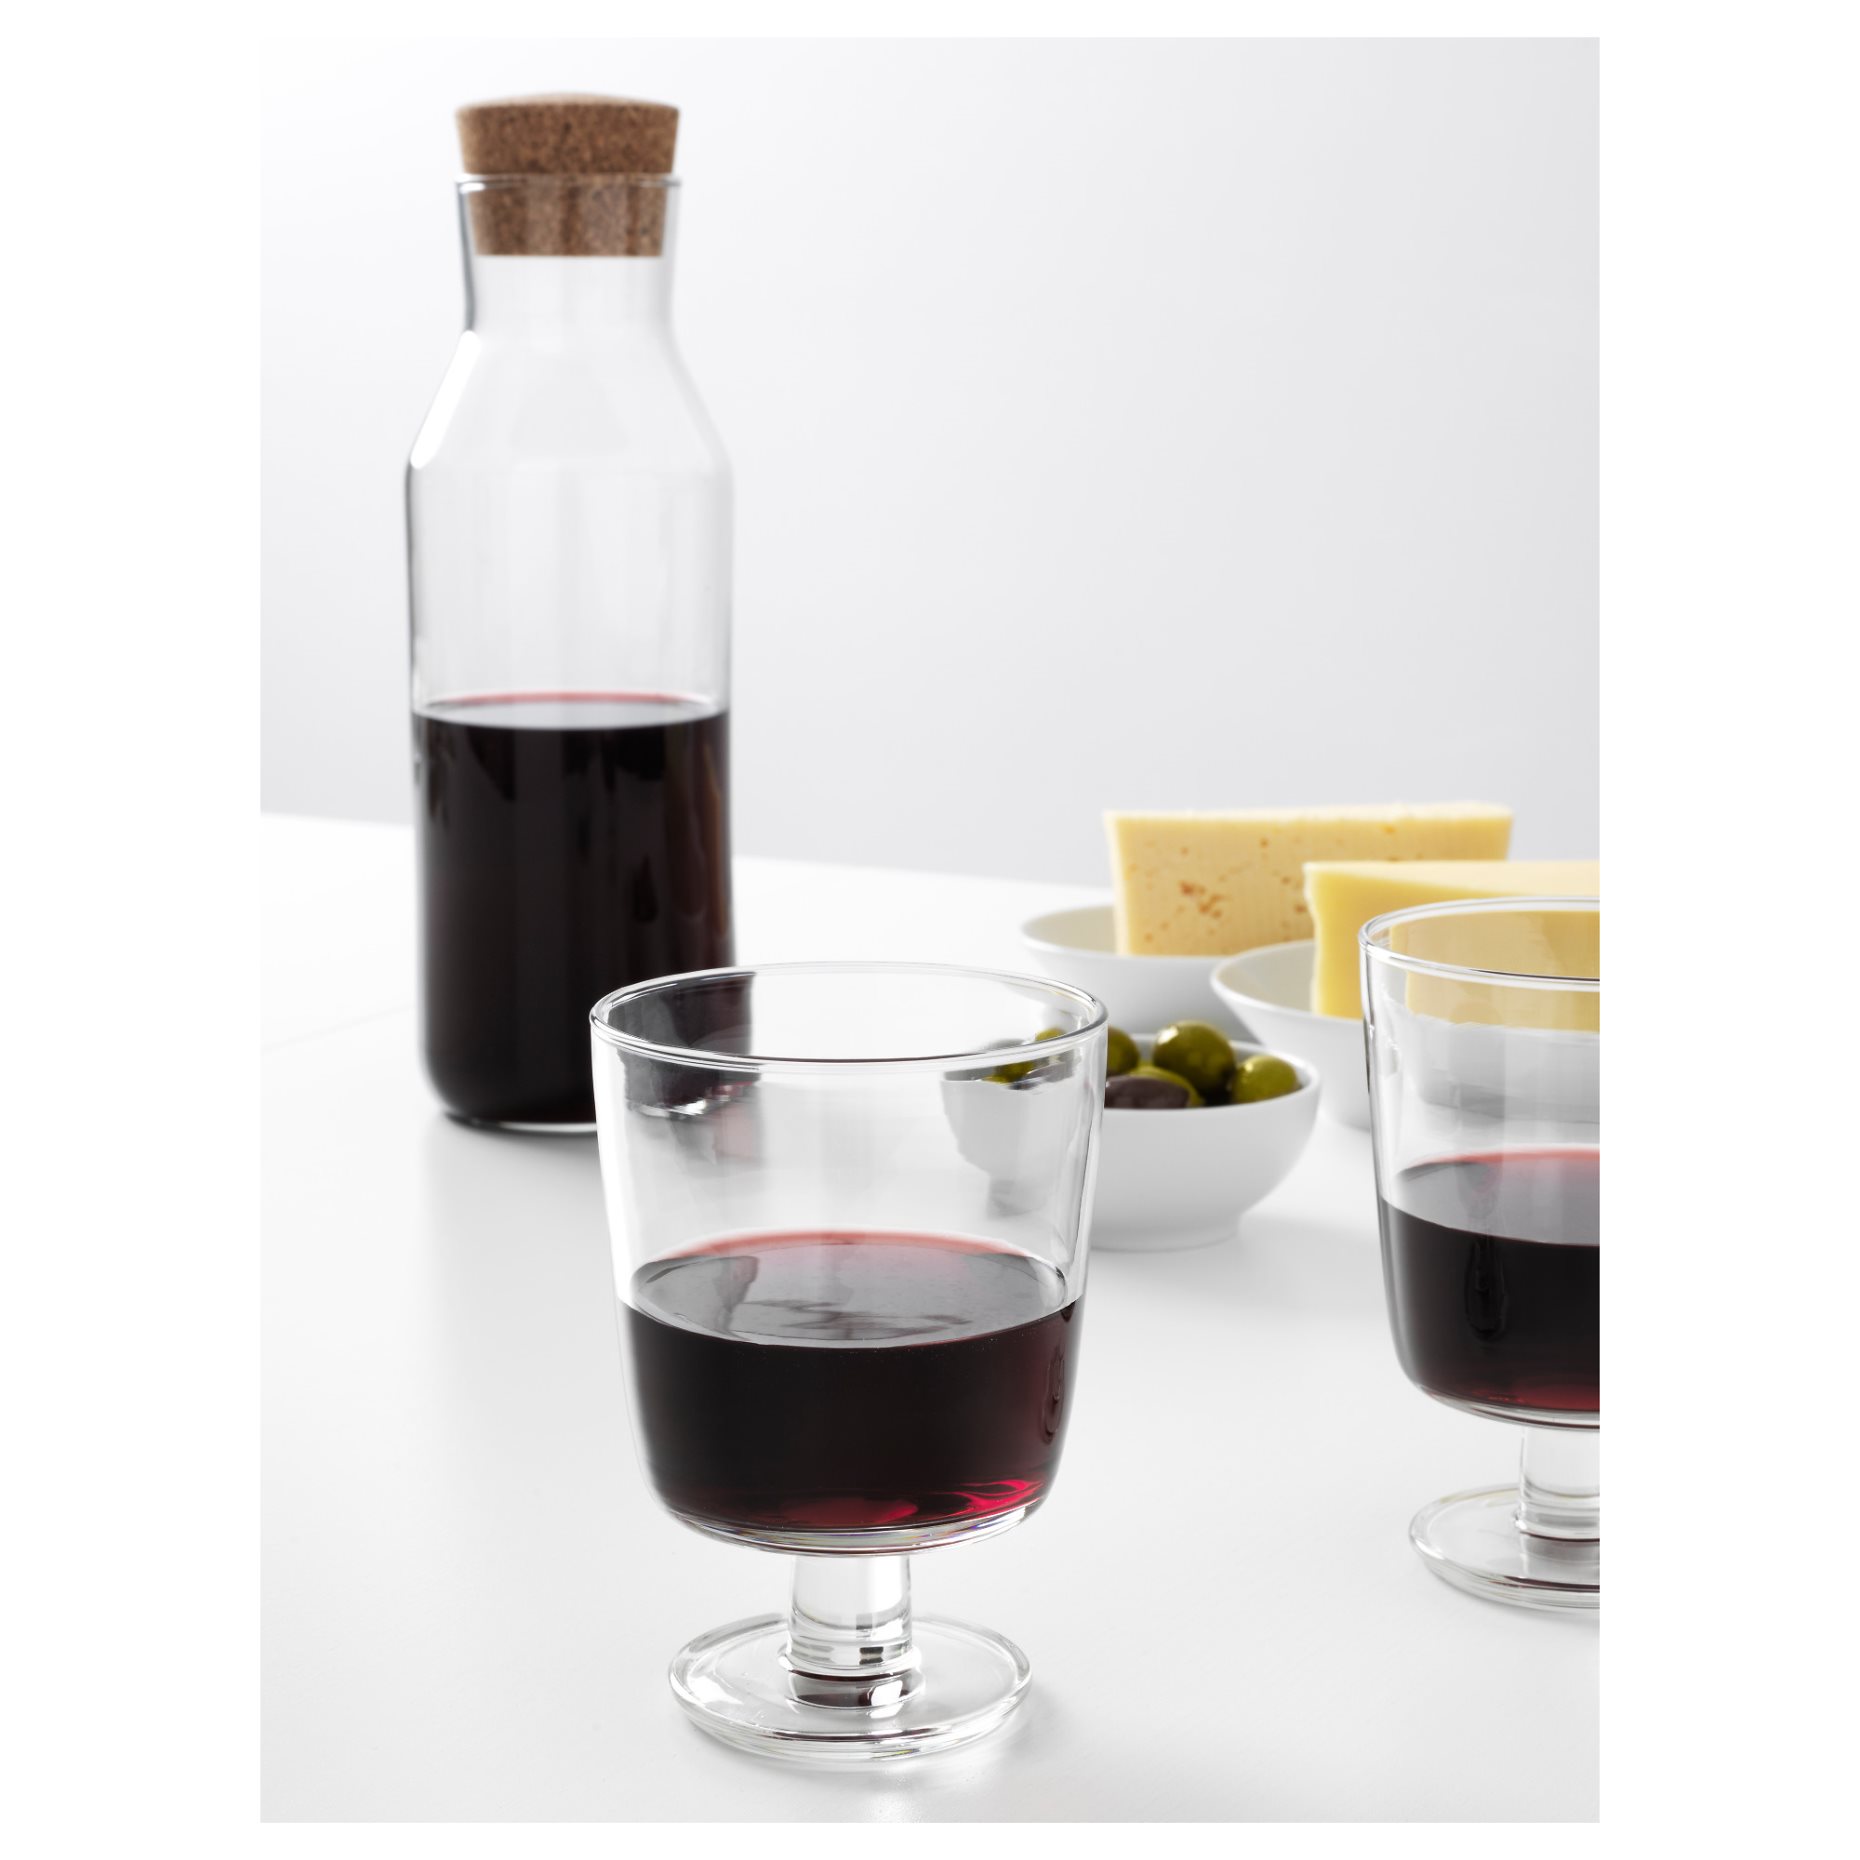 IKEA 365+, Ποτήρι κρασιού διαφανές γυαλί, 702.783.63